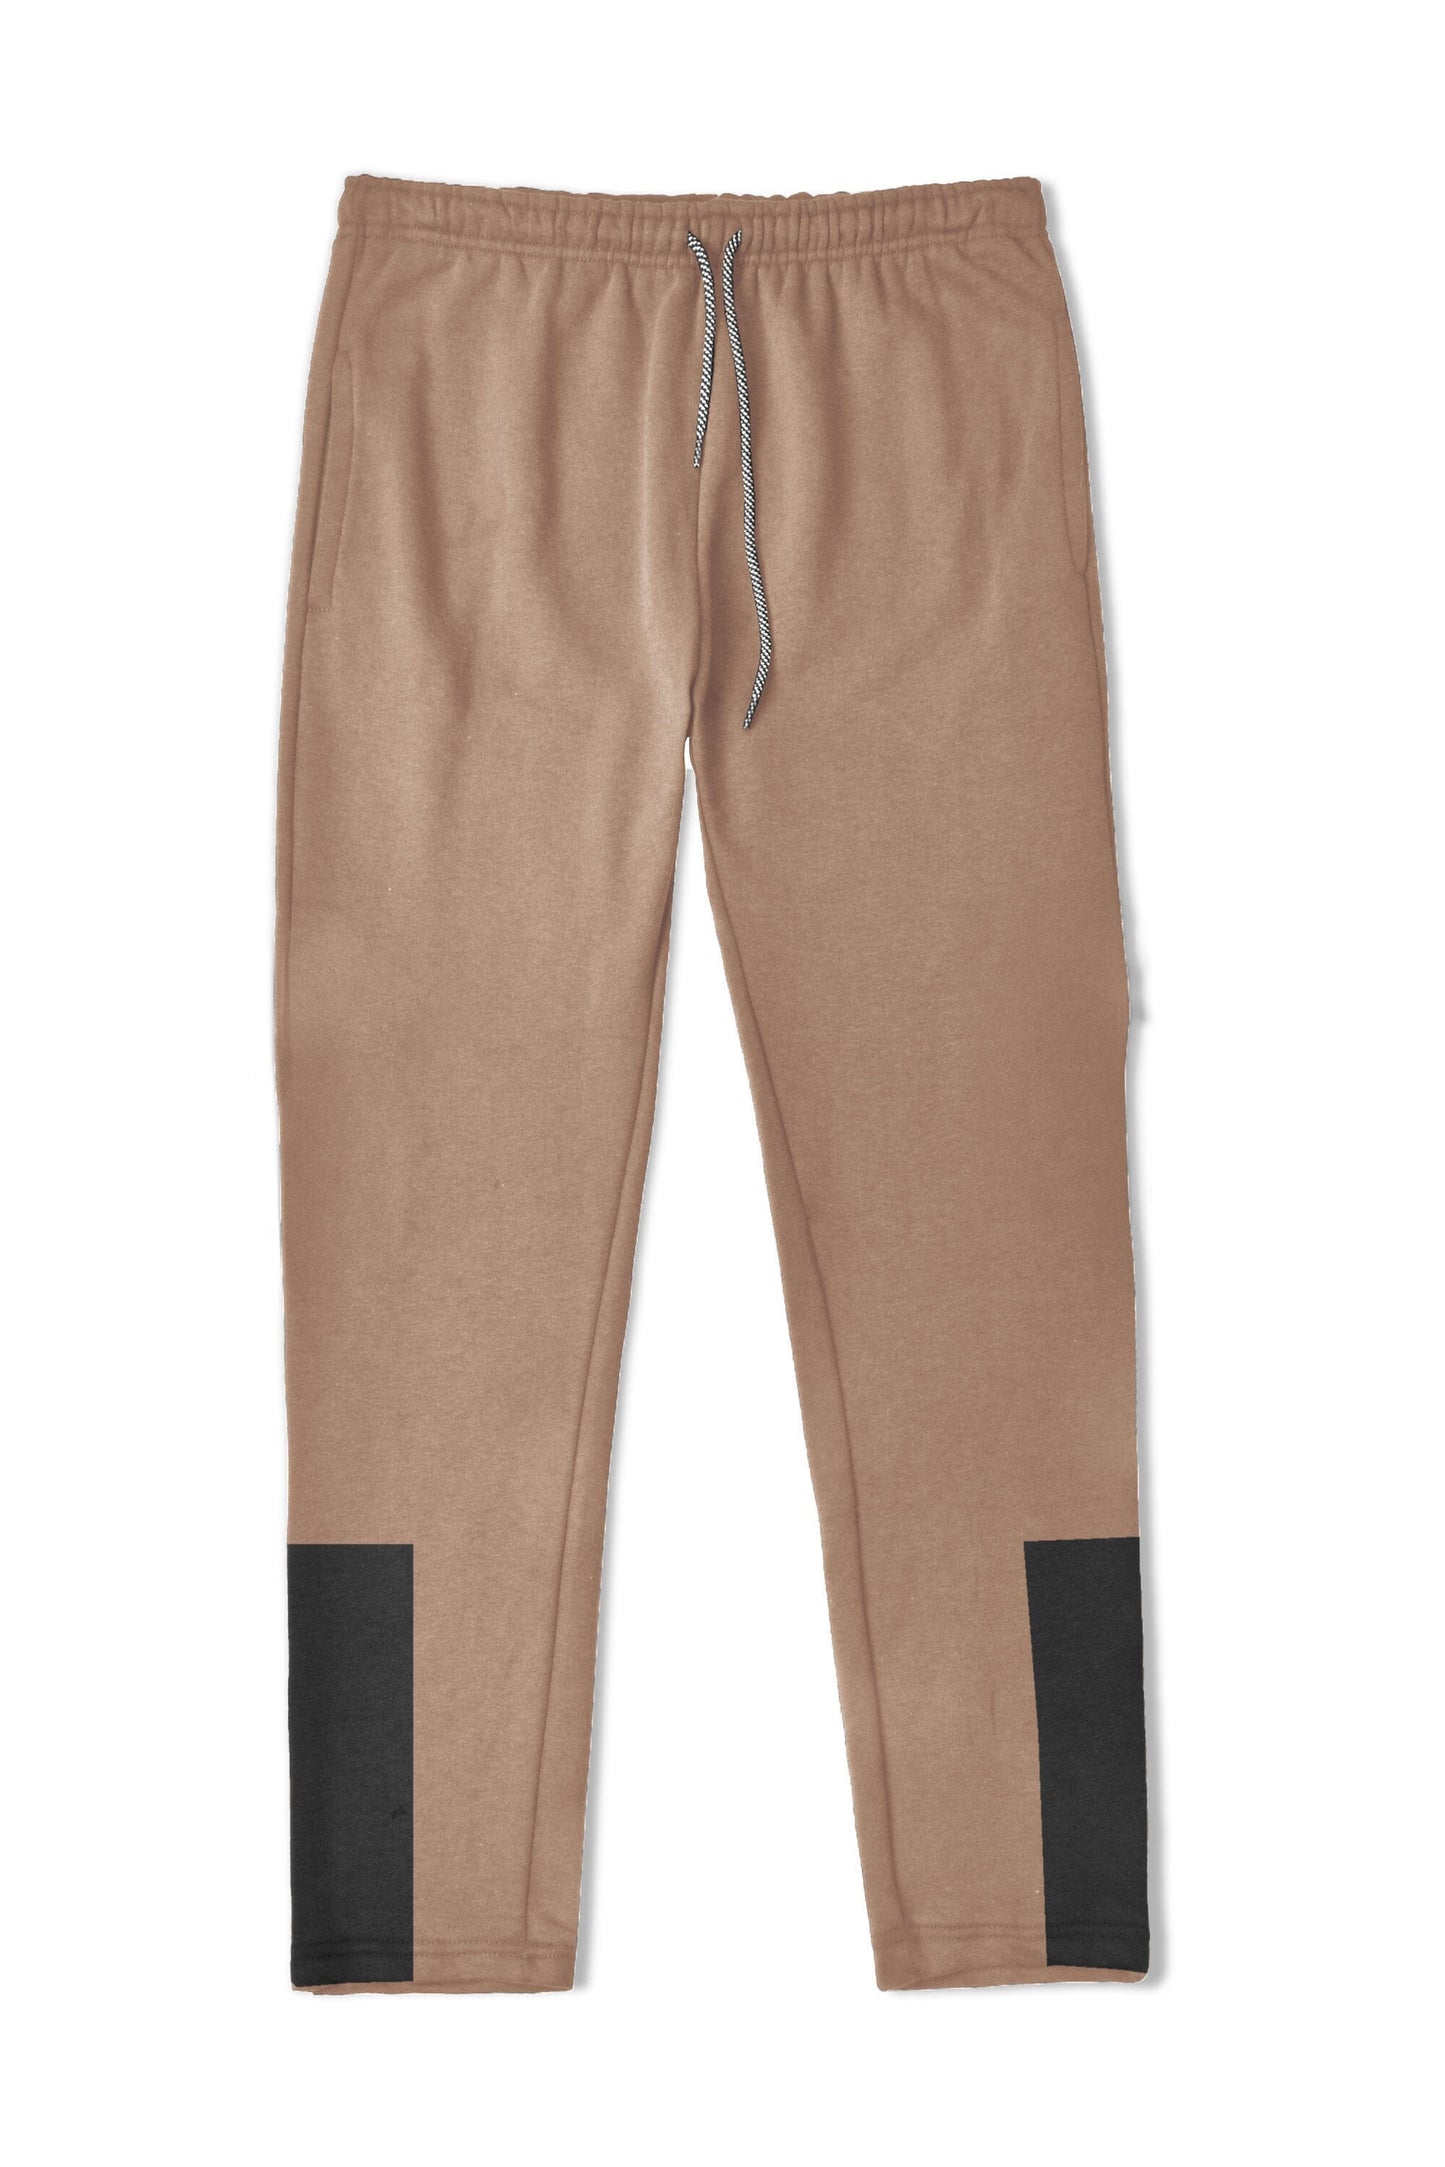 MAX 21 Men's Bottom Panel Style Fleece Trousers